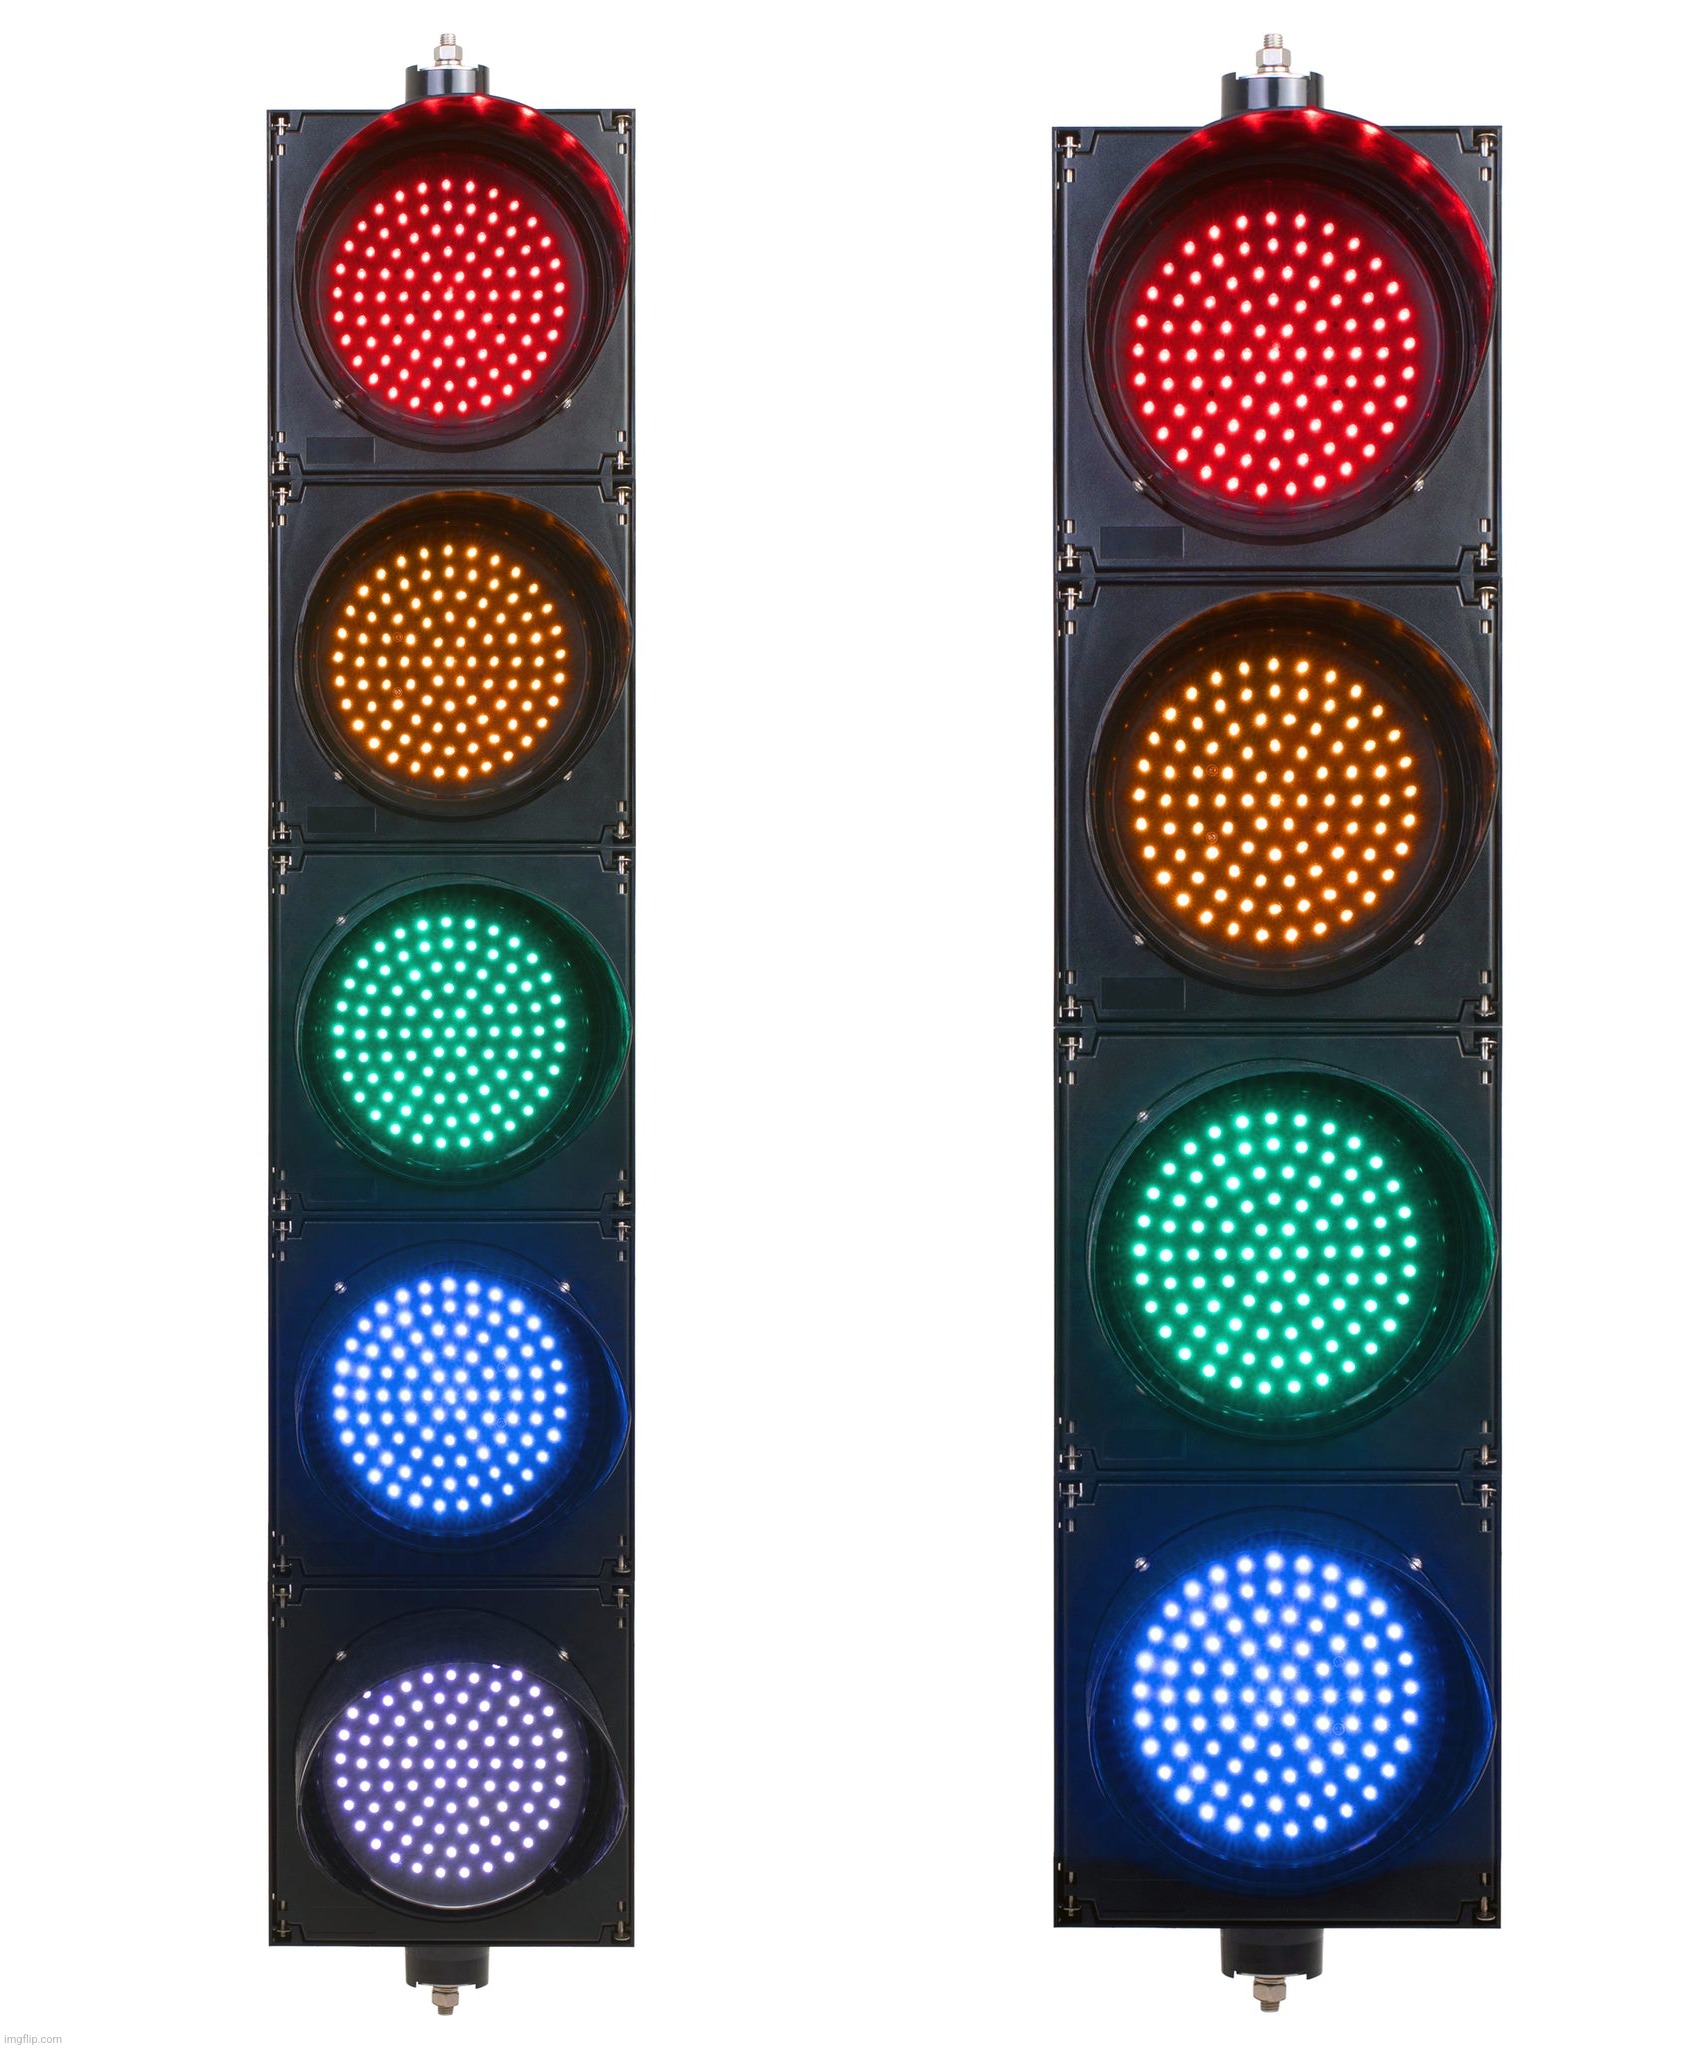 Traffic lights in XK | made w/ Imgflip meme maker